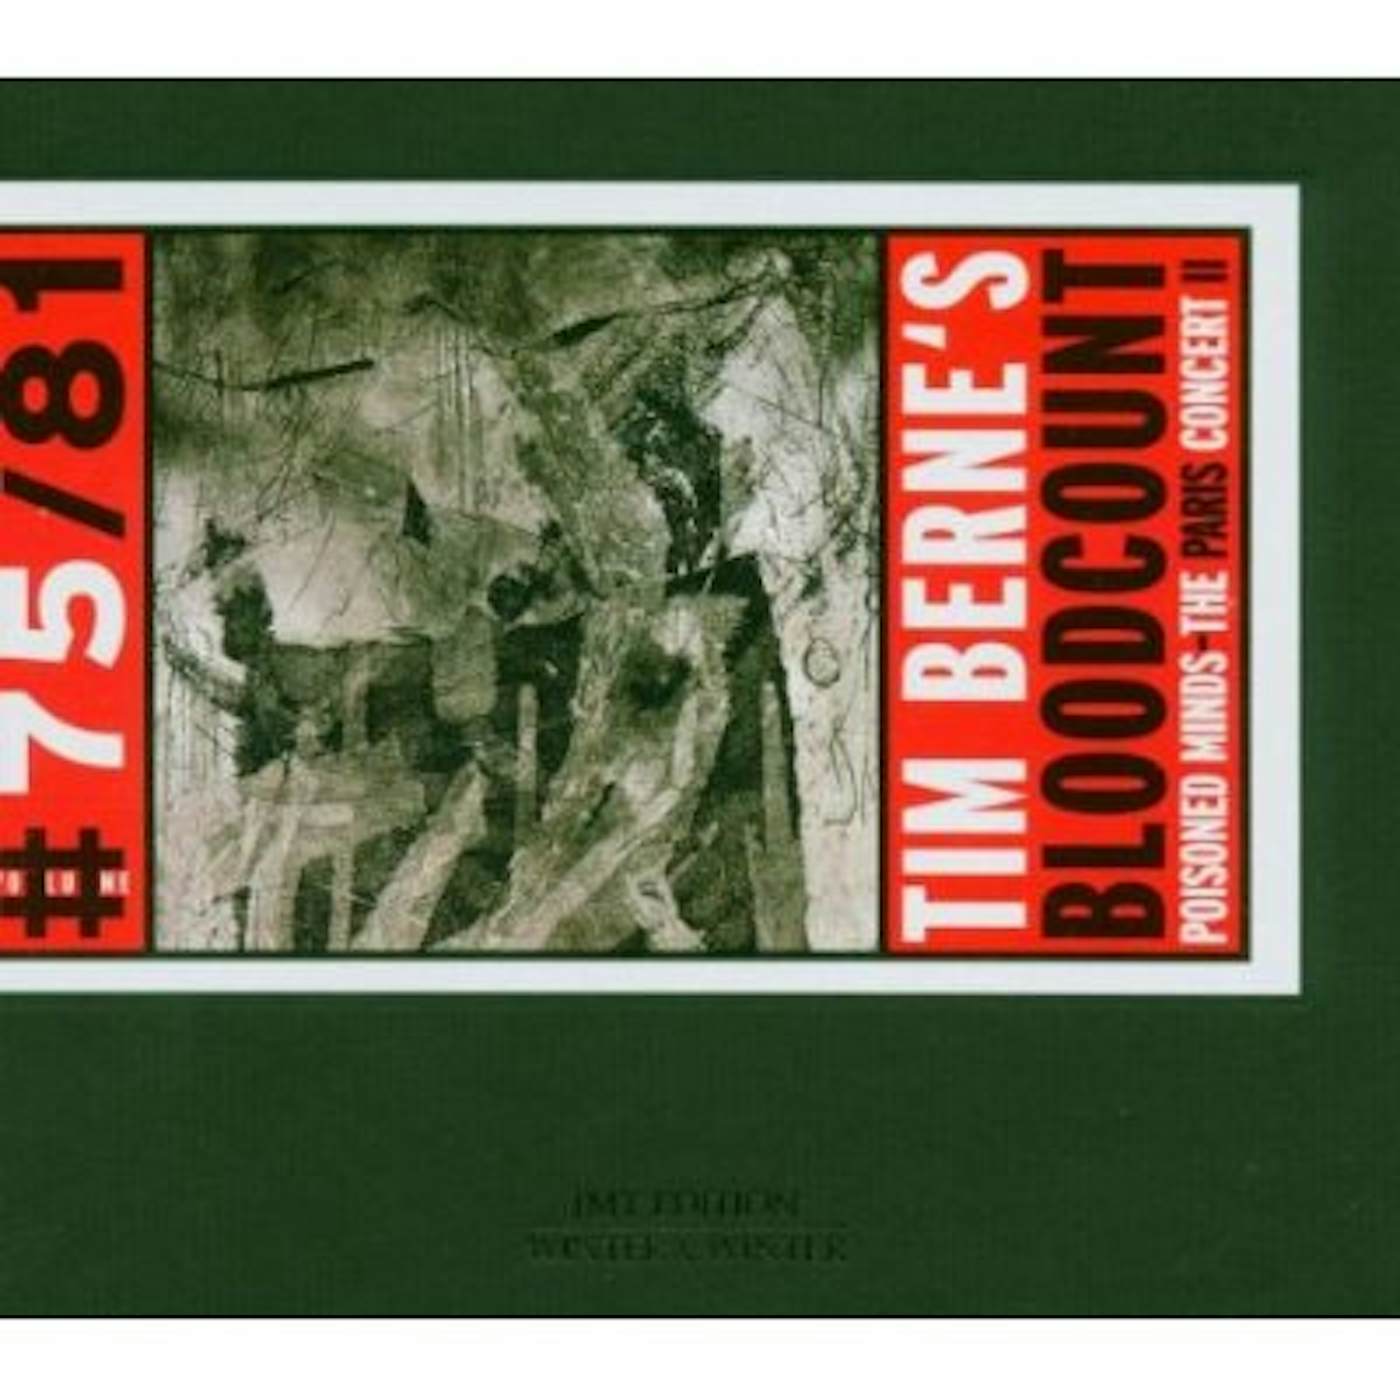 Tim Berne BLOODCOUNT: POISONED MINDS PARIS CONCERT 2 CD